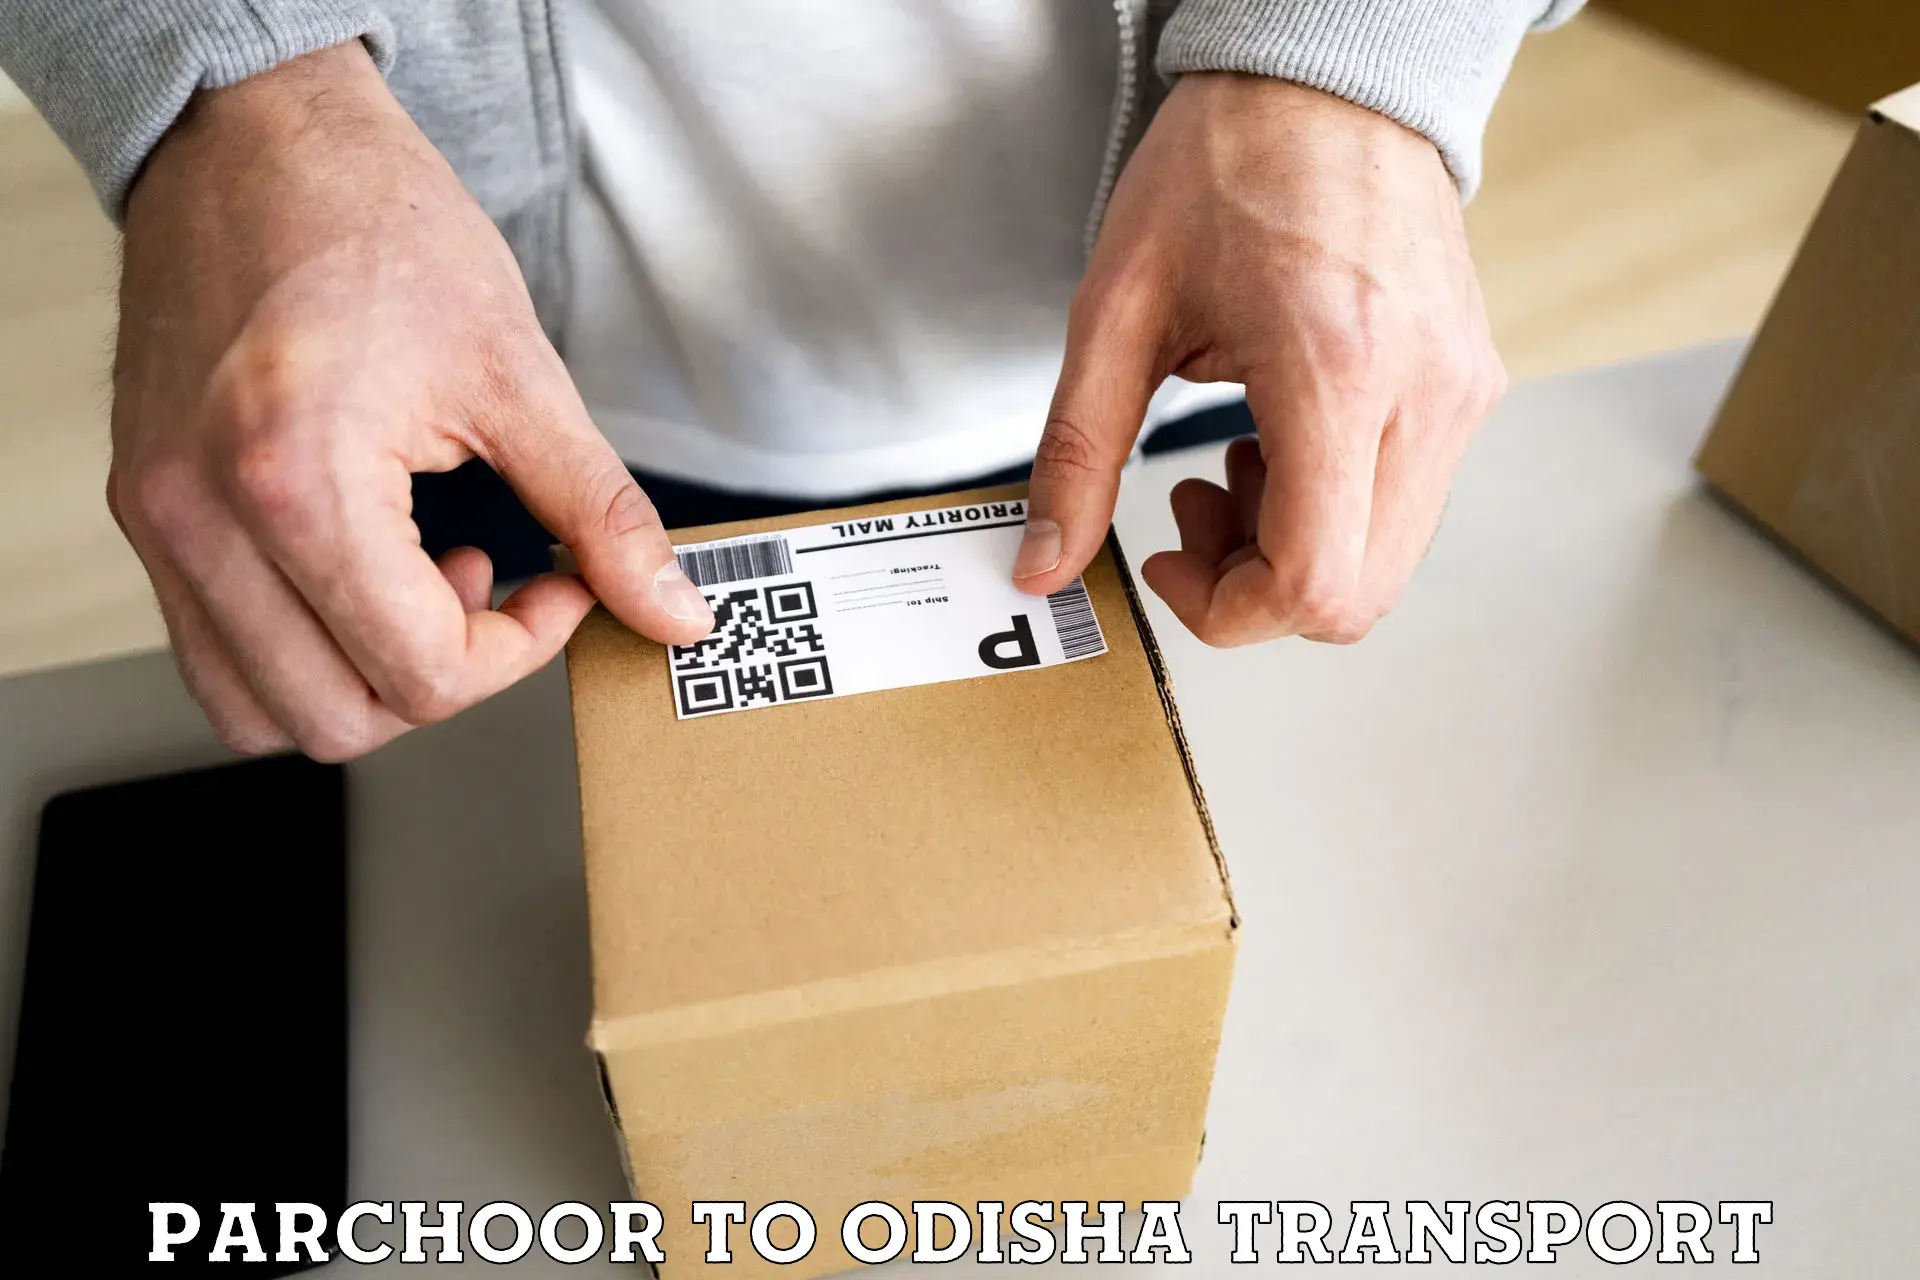 Delivery service Parchoor to Sambalpur